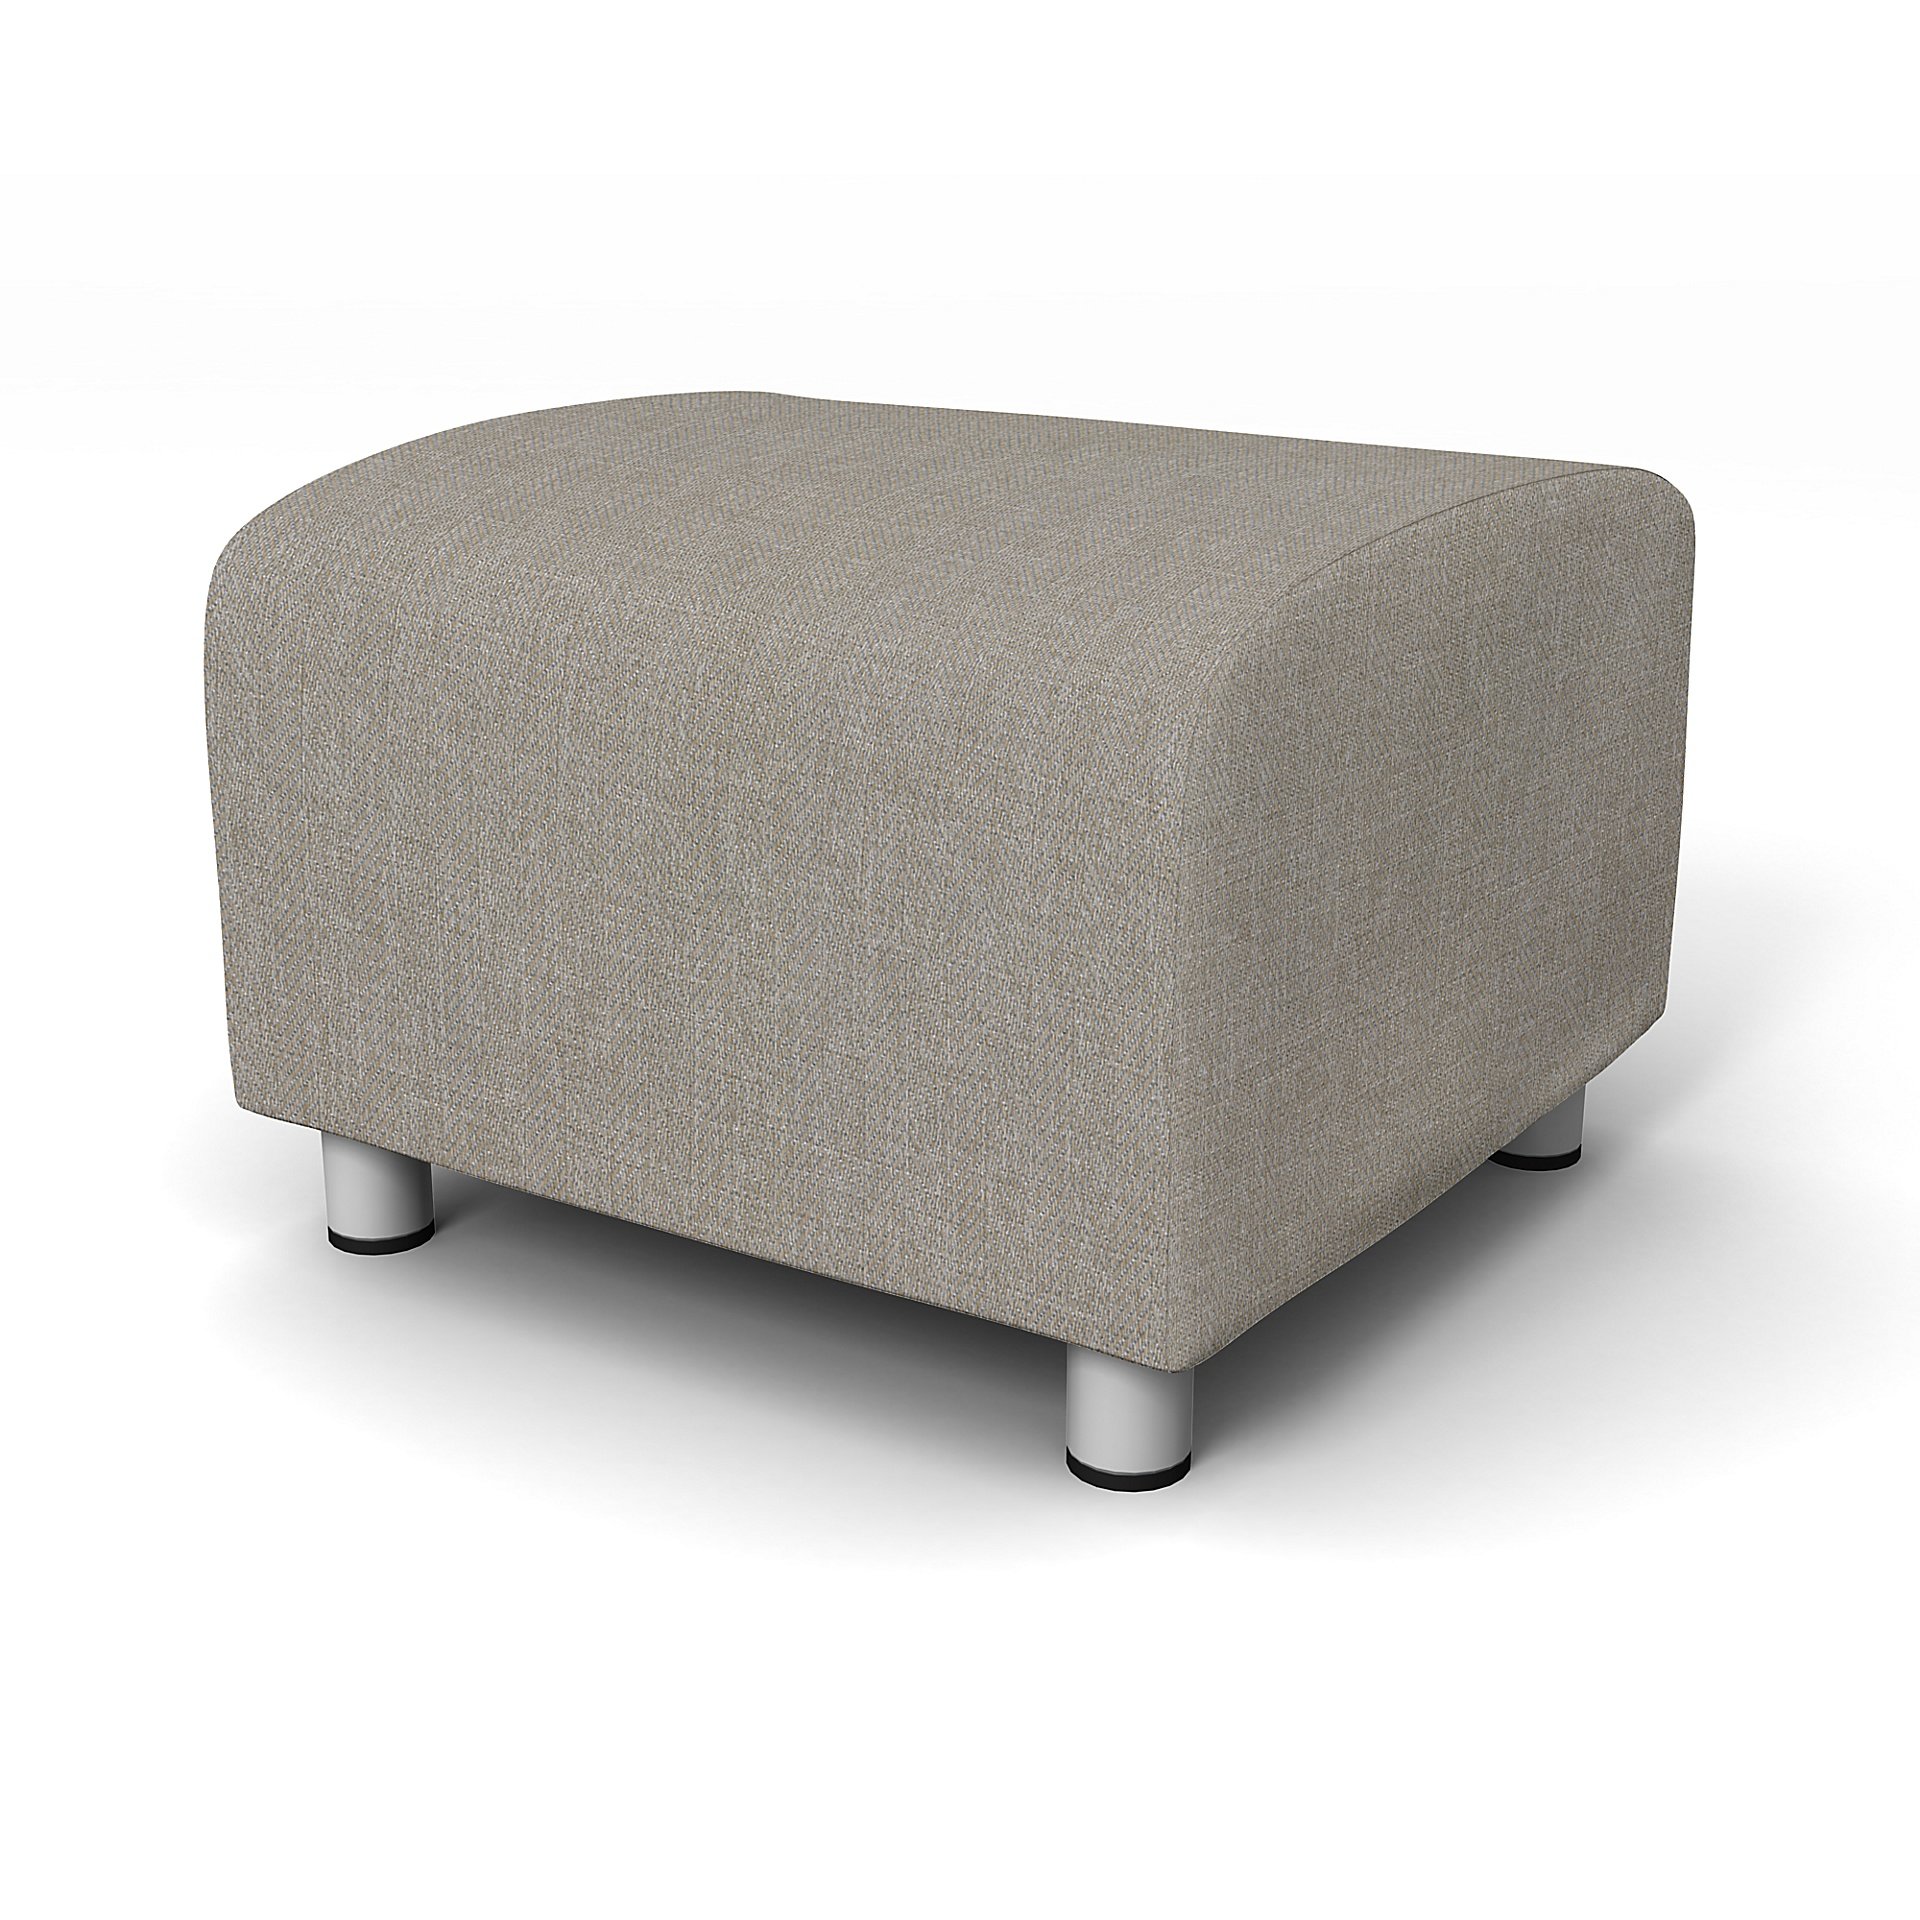 IKEA - Klippan Footstool Cover, Greige, Boucle & Texture - Bemz